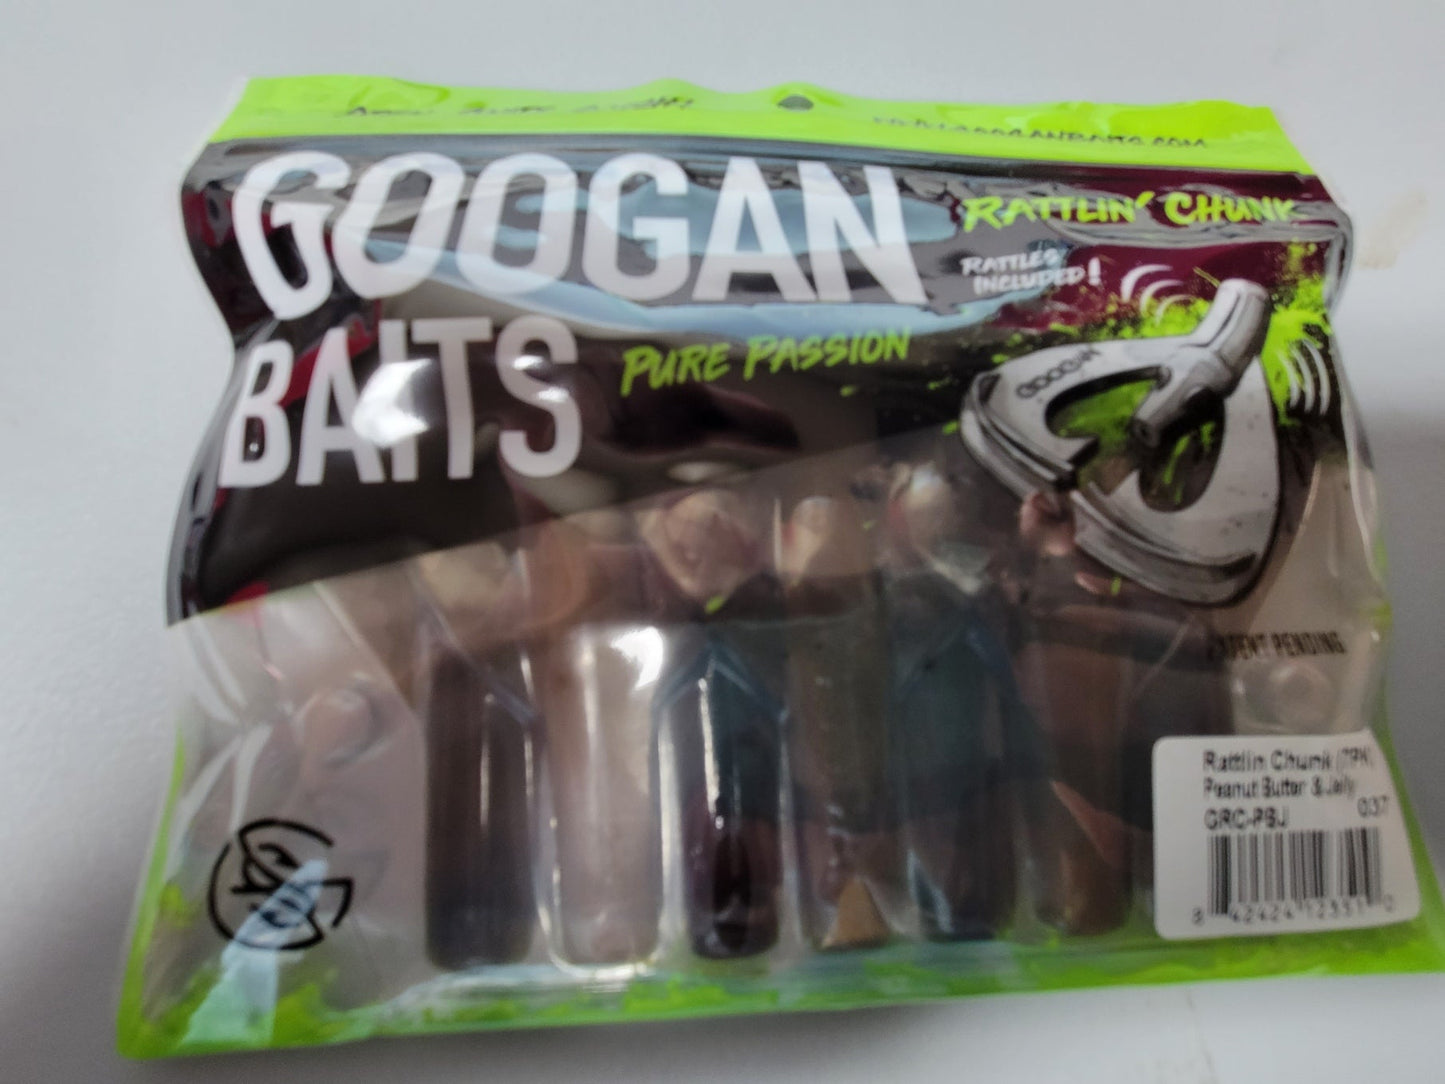 Googan Rattlin'  Chunk Peanut Butter & Jelly